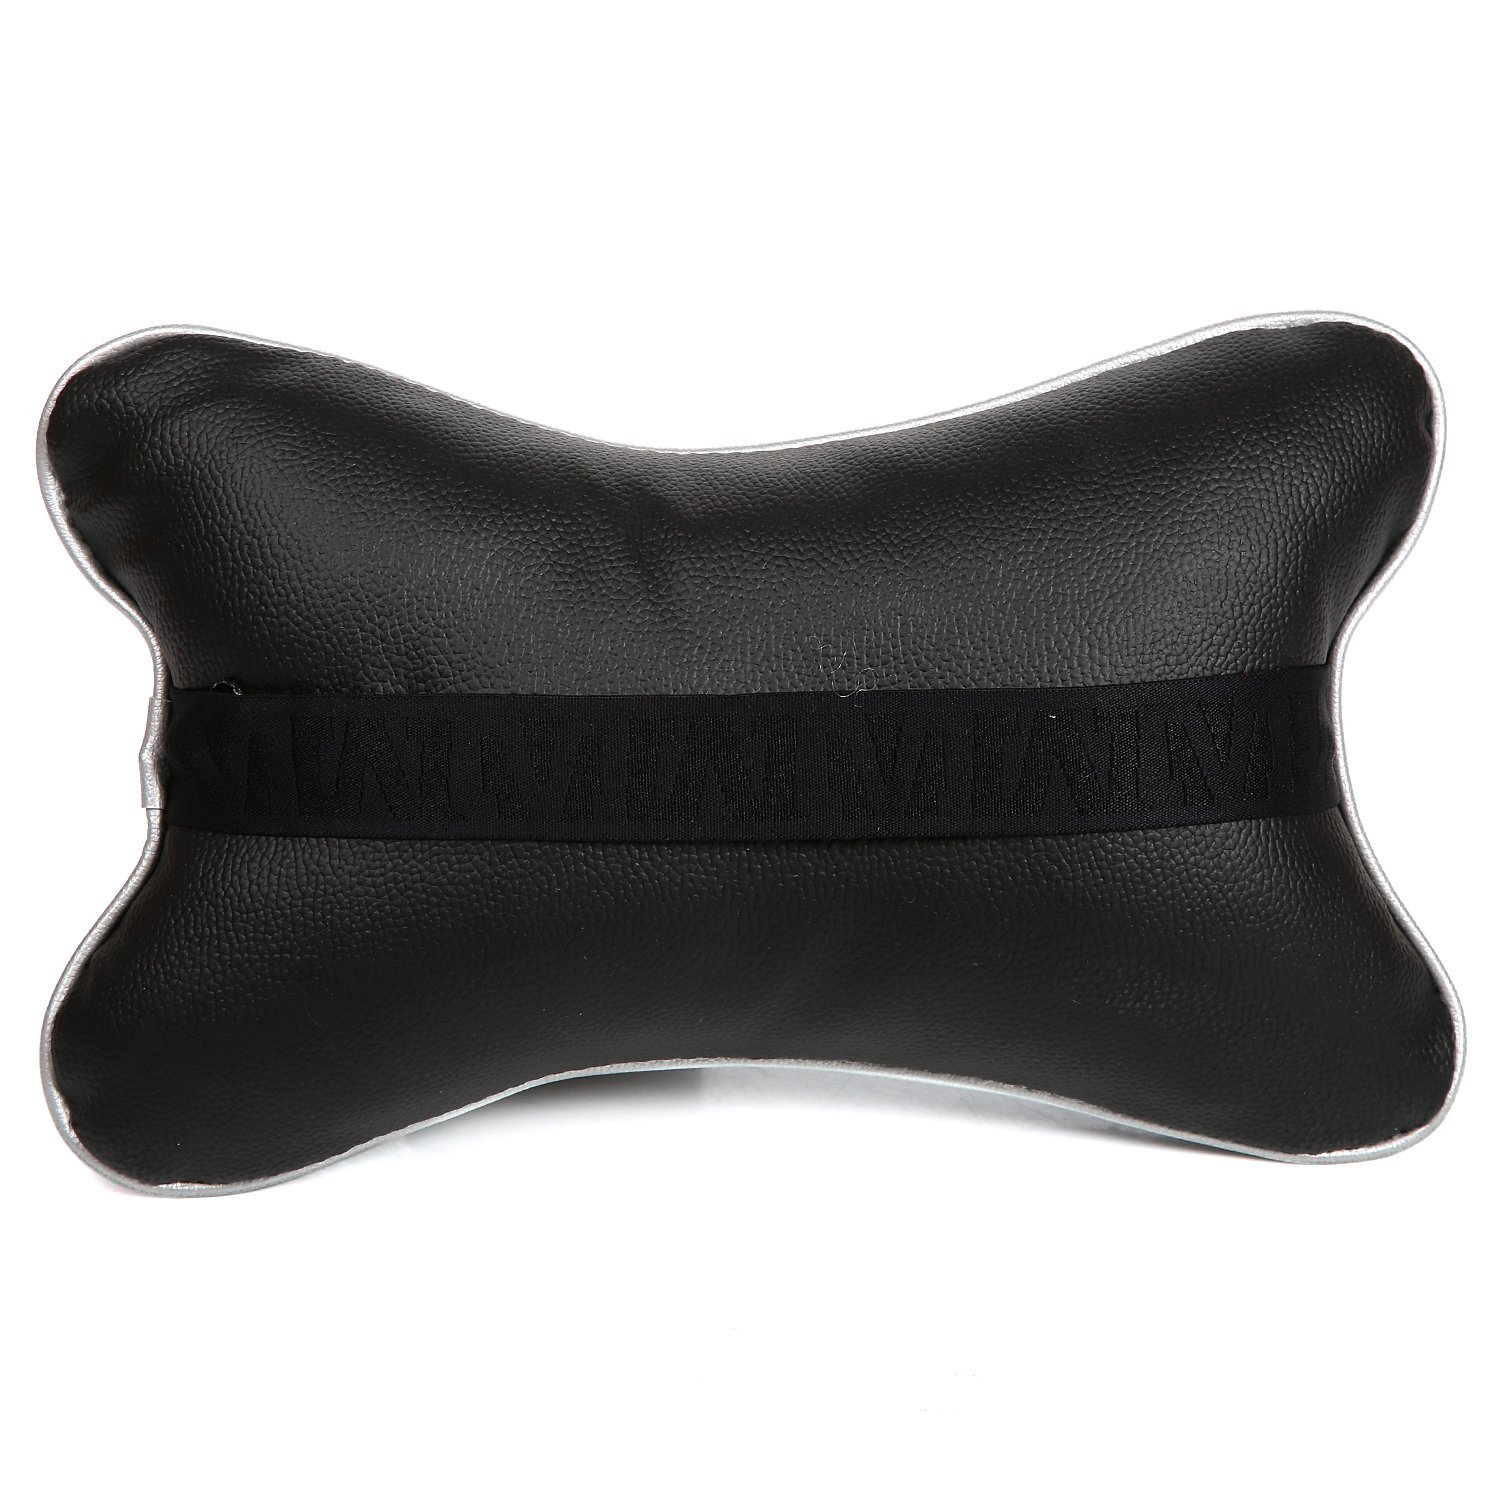 Neck Rest Pillow in Black (Set of 2)